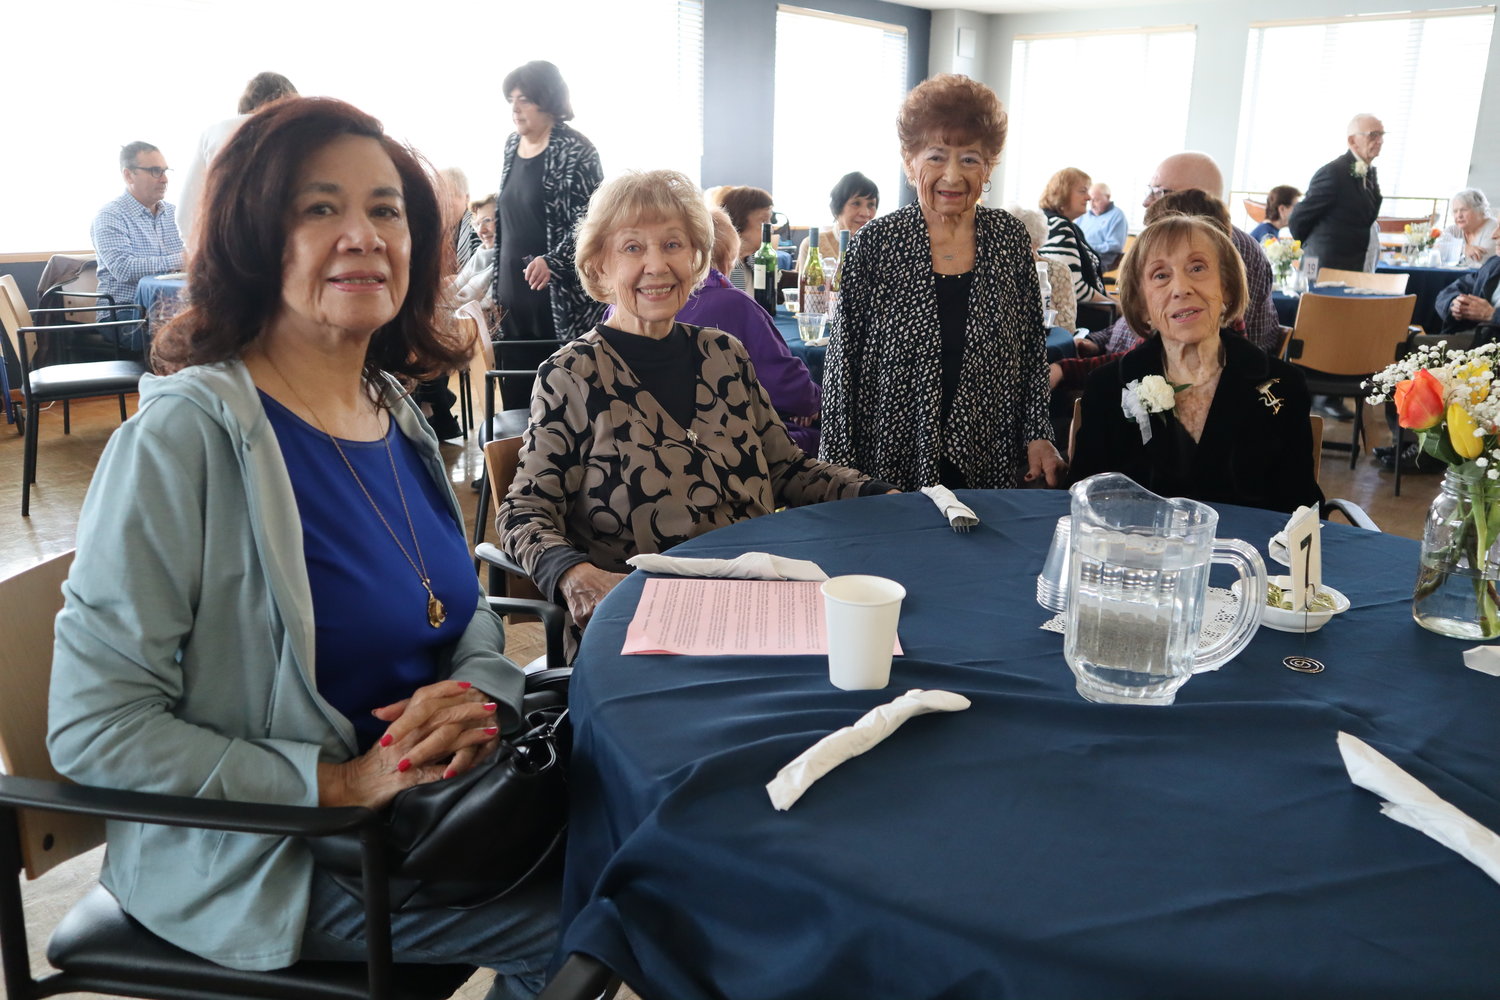 Ivonne Filiano, far left, Ellie O’Brien, Fran Kaplan and Selma Stone enjoy celebrating this milestone in the company of close friends.